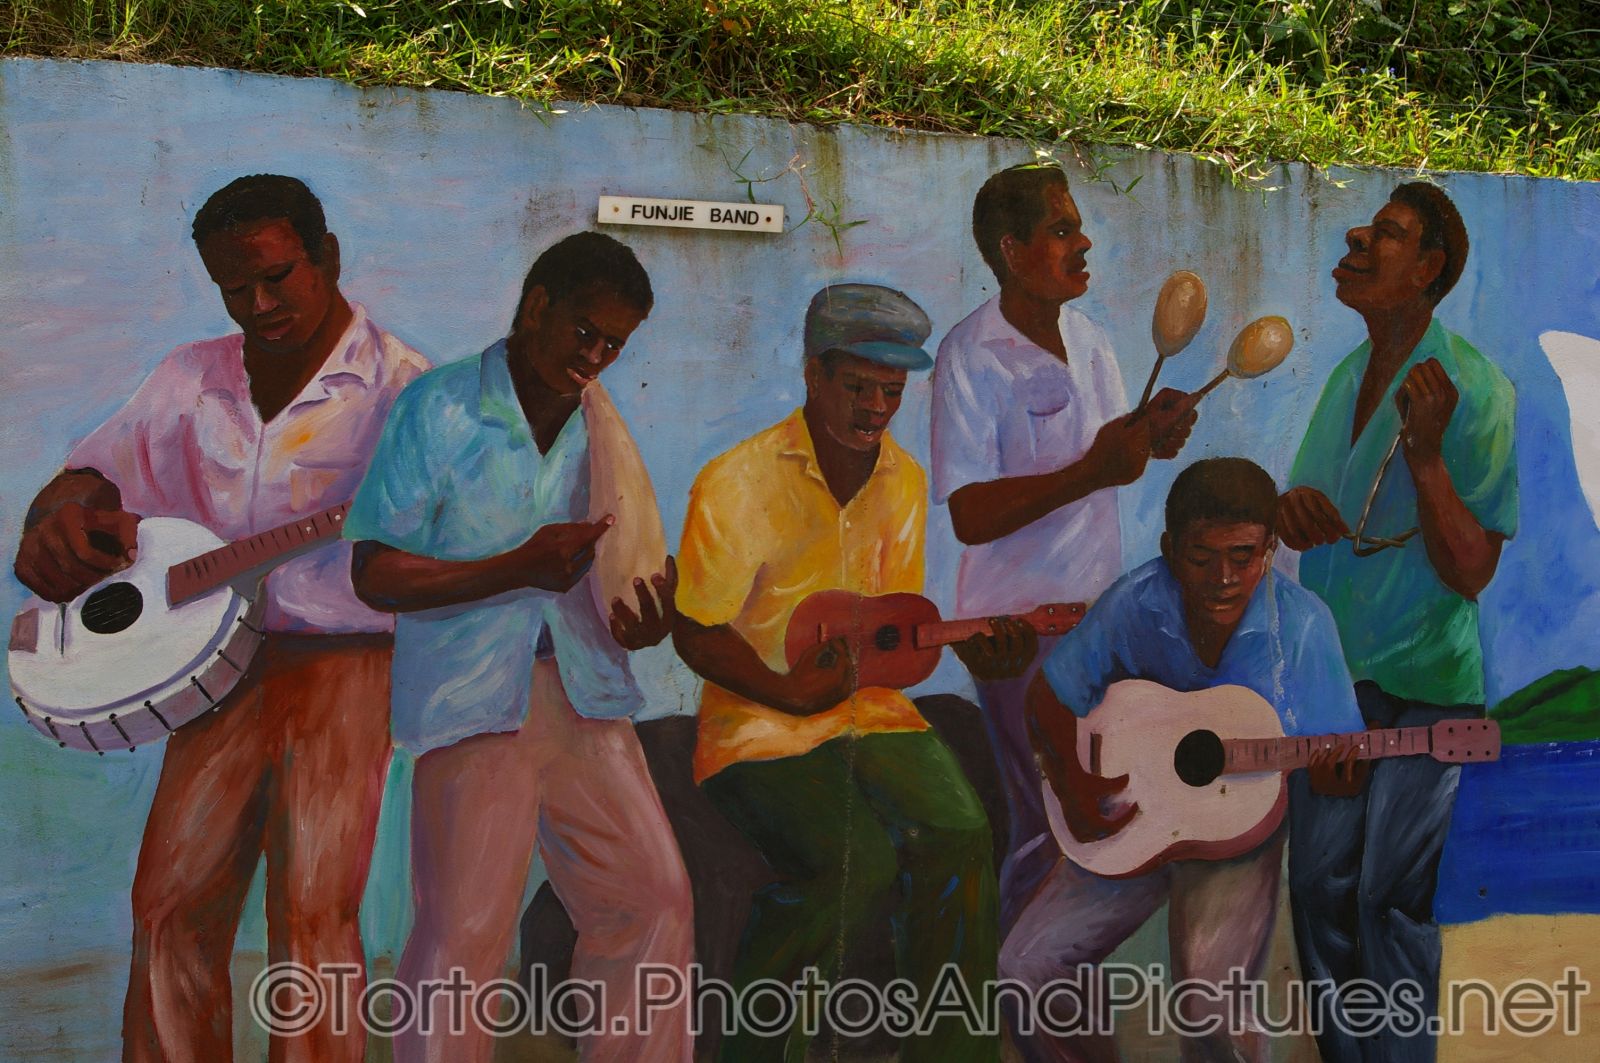 Funjie Band in Tortola.jpg
